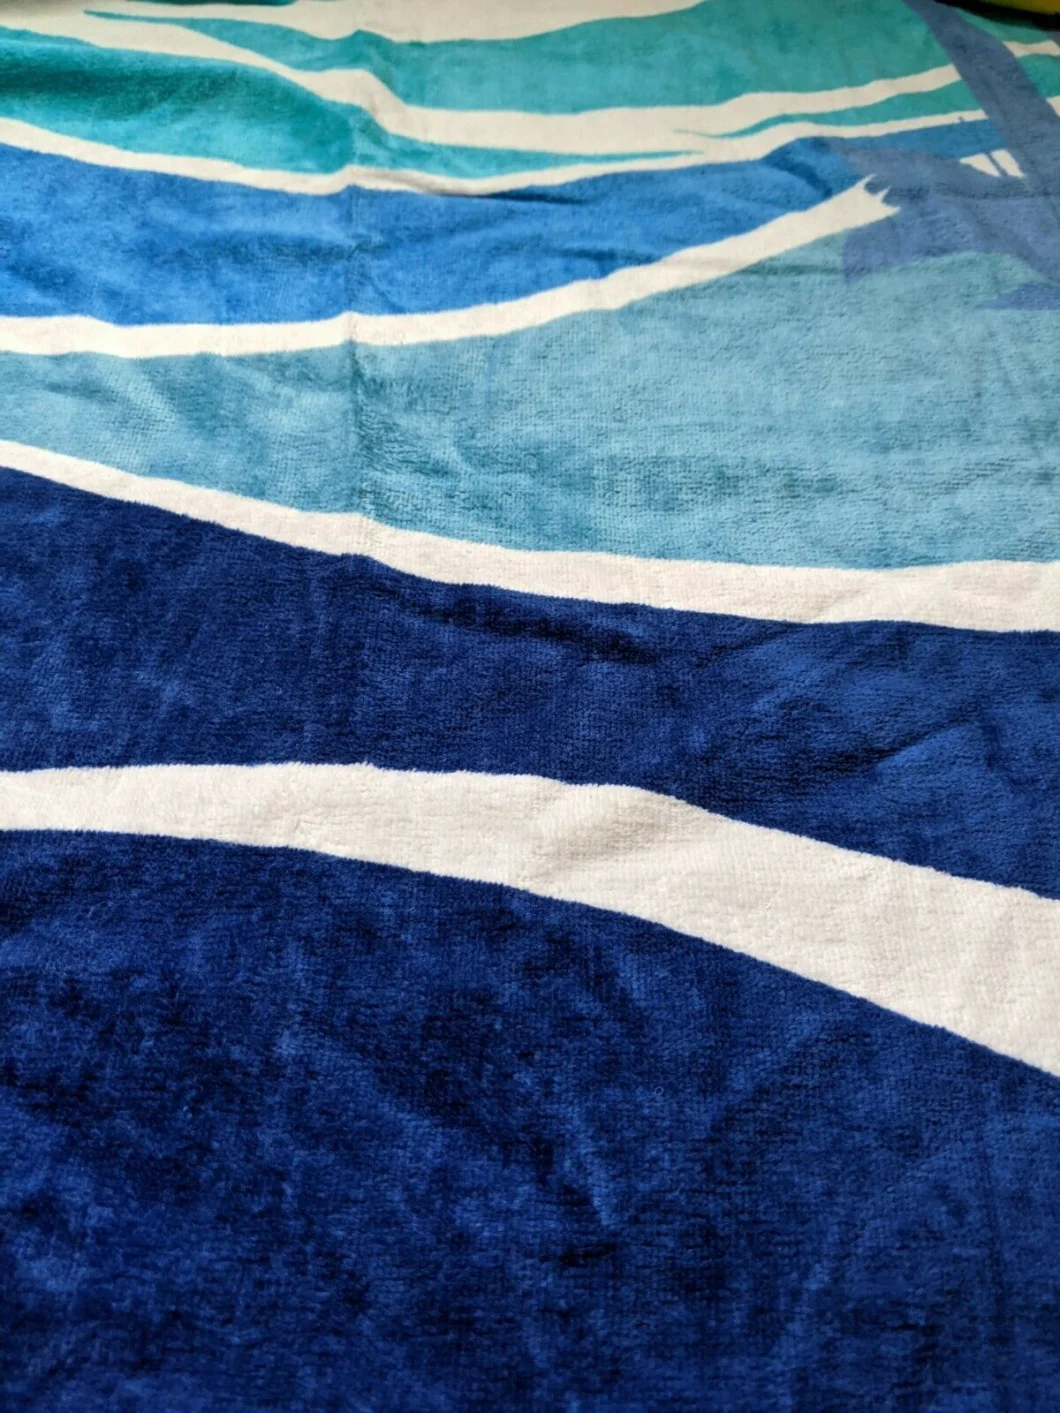 Extra Large Beach Towel - 100% Cotton Multiple Designs Bath Sheet Holidays